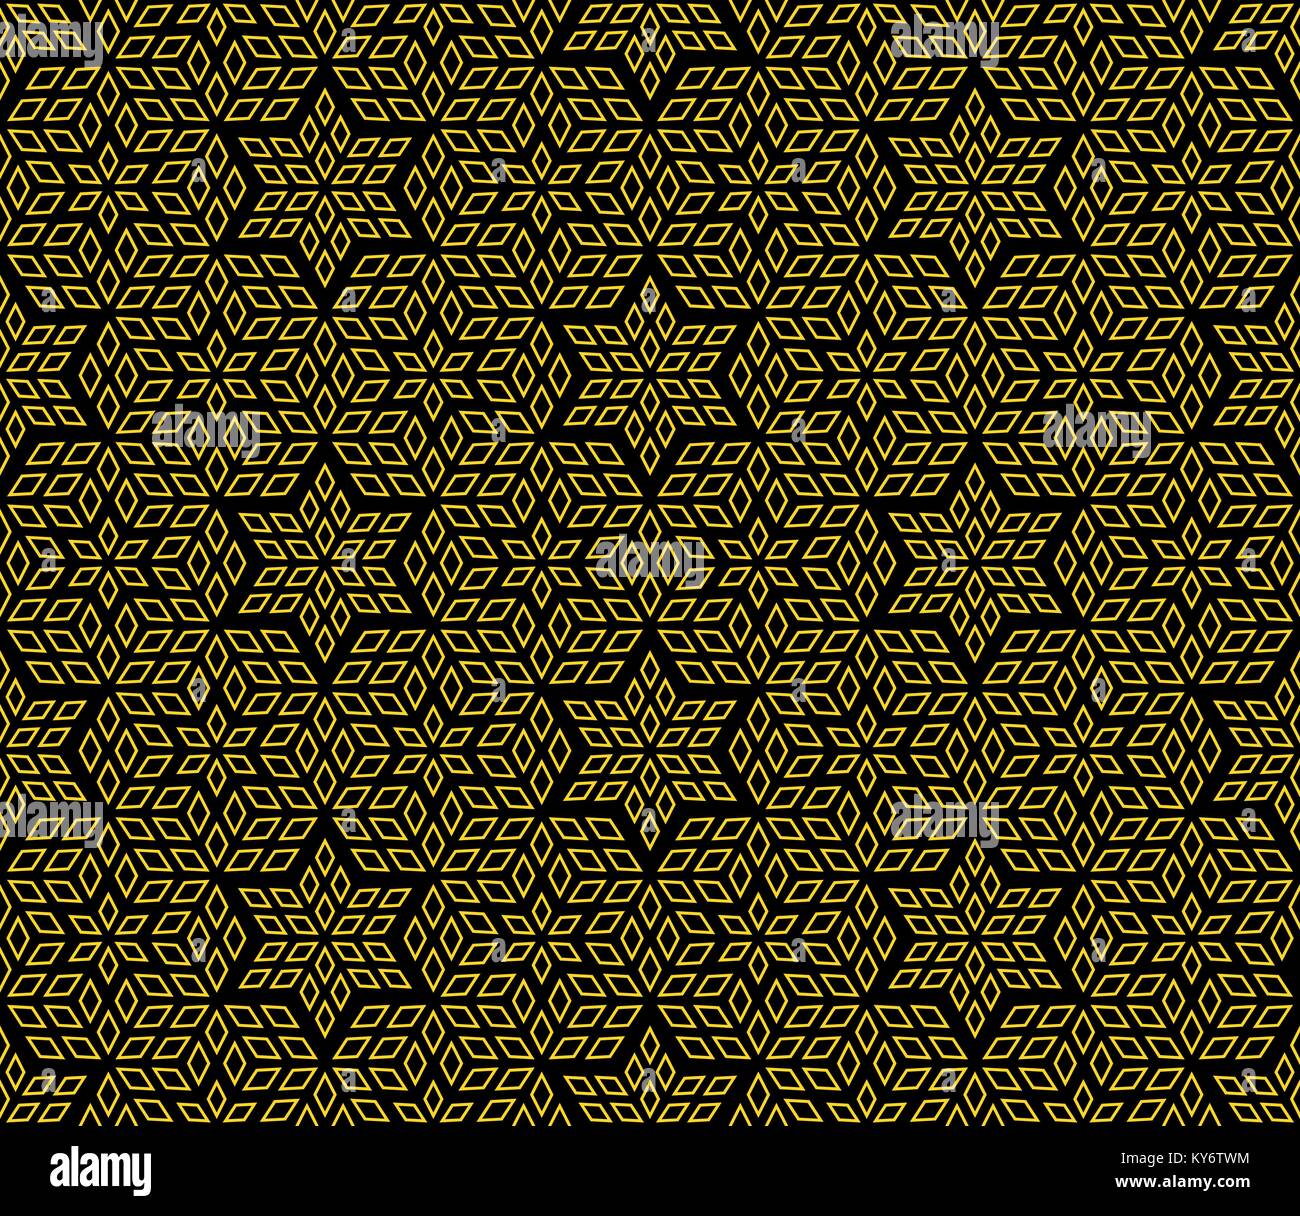 seamless geometric pattern made up of diamonds Stock Vector